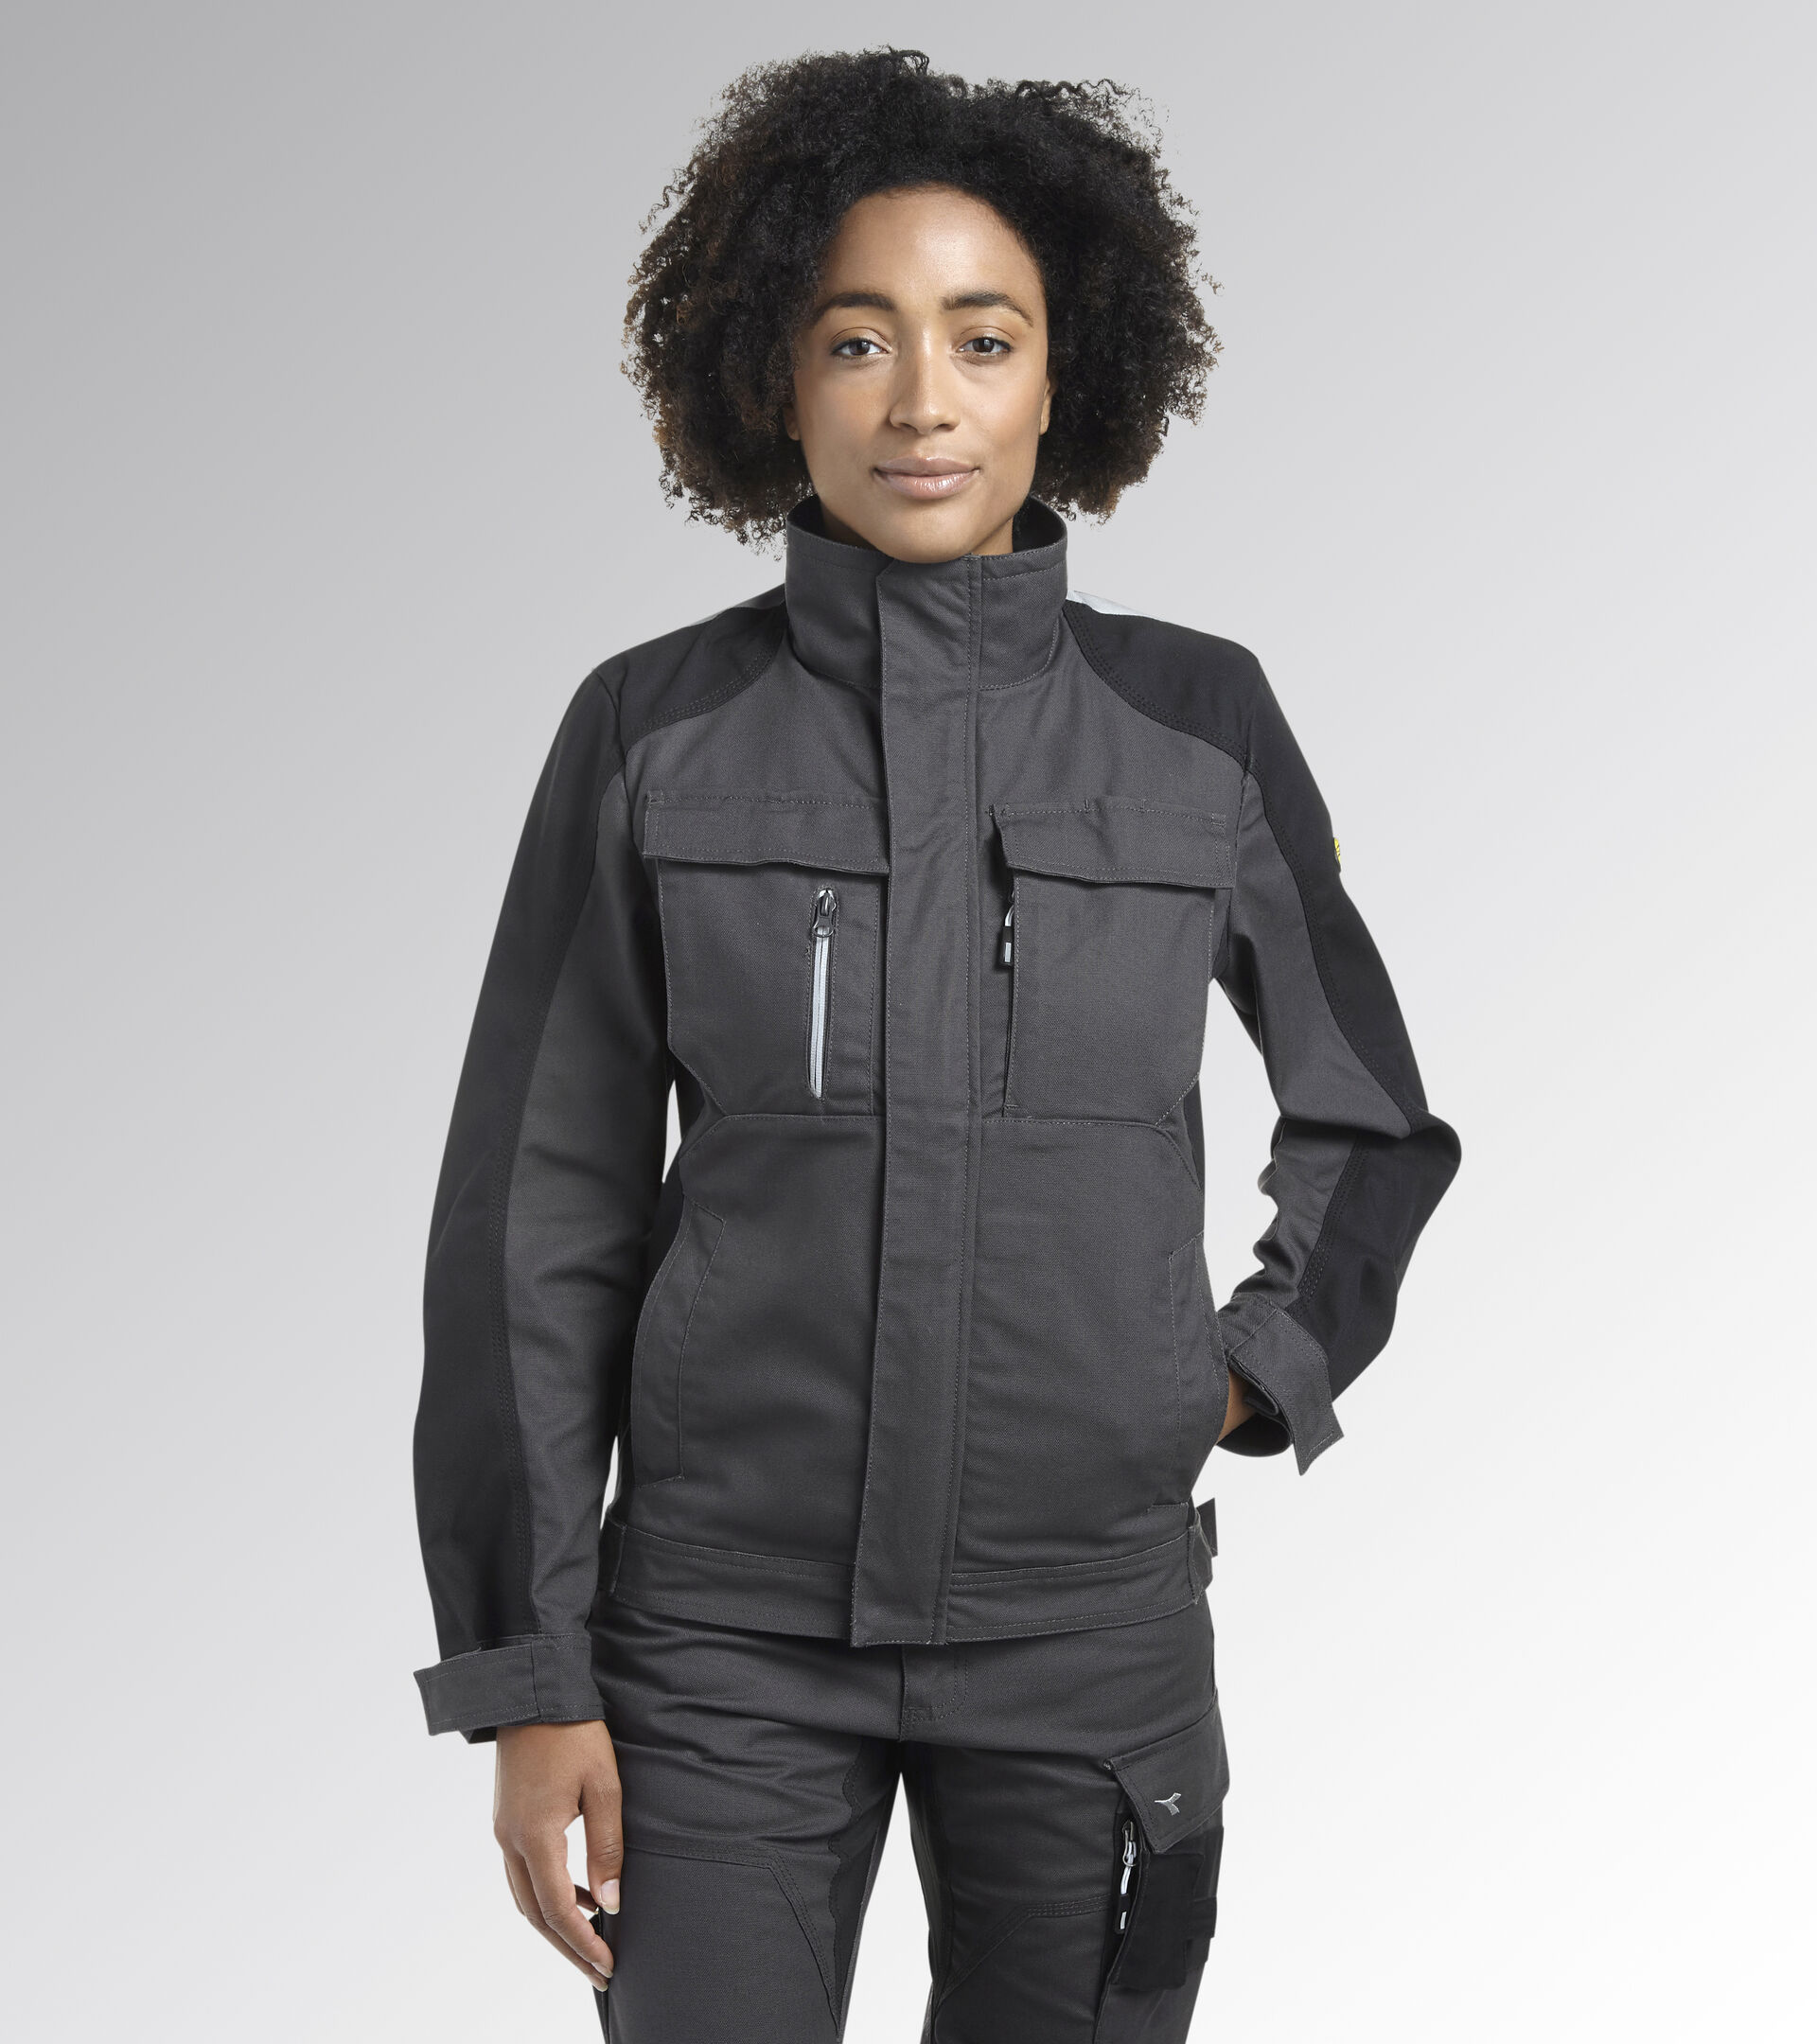 Work jacket WORKWEAR JKT TECH BLACK COAL - Utility